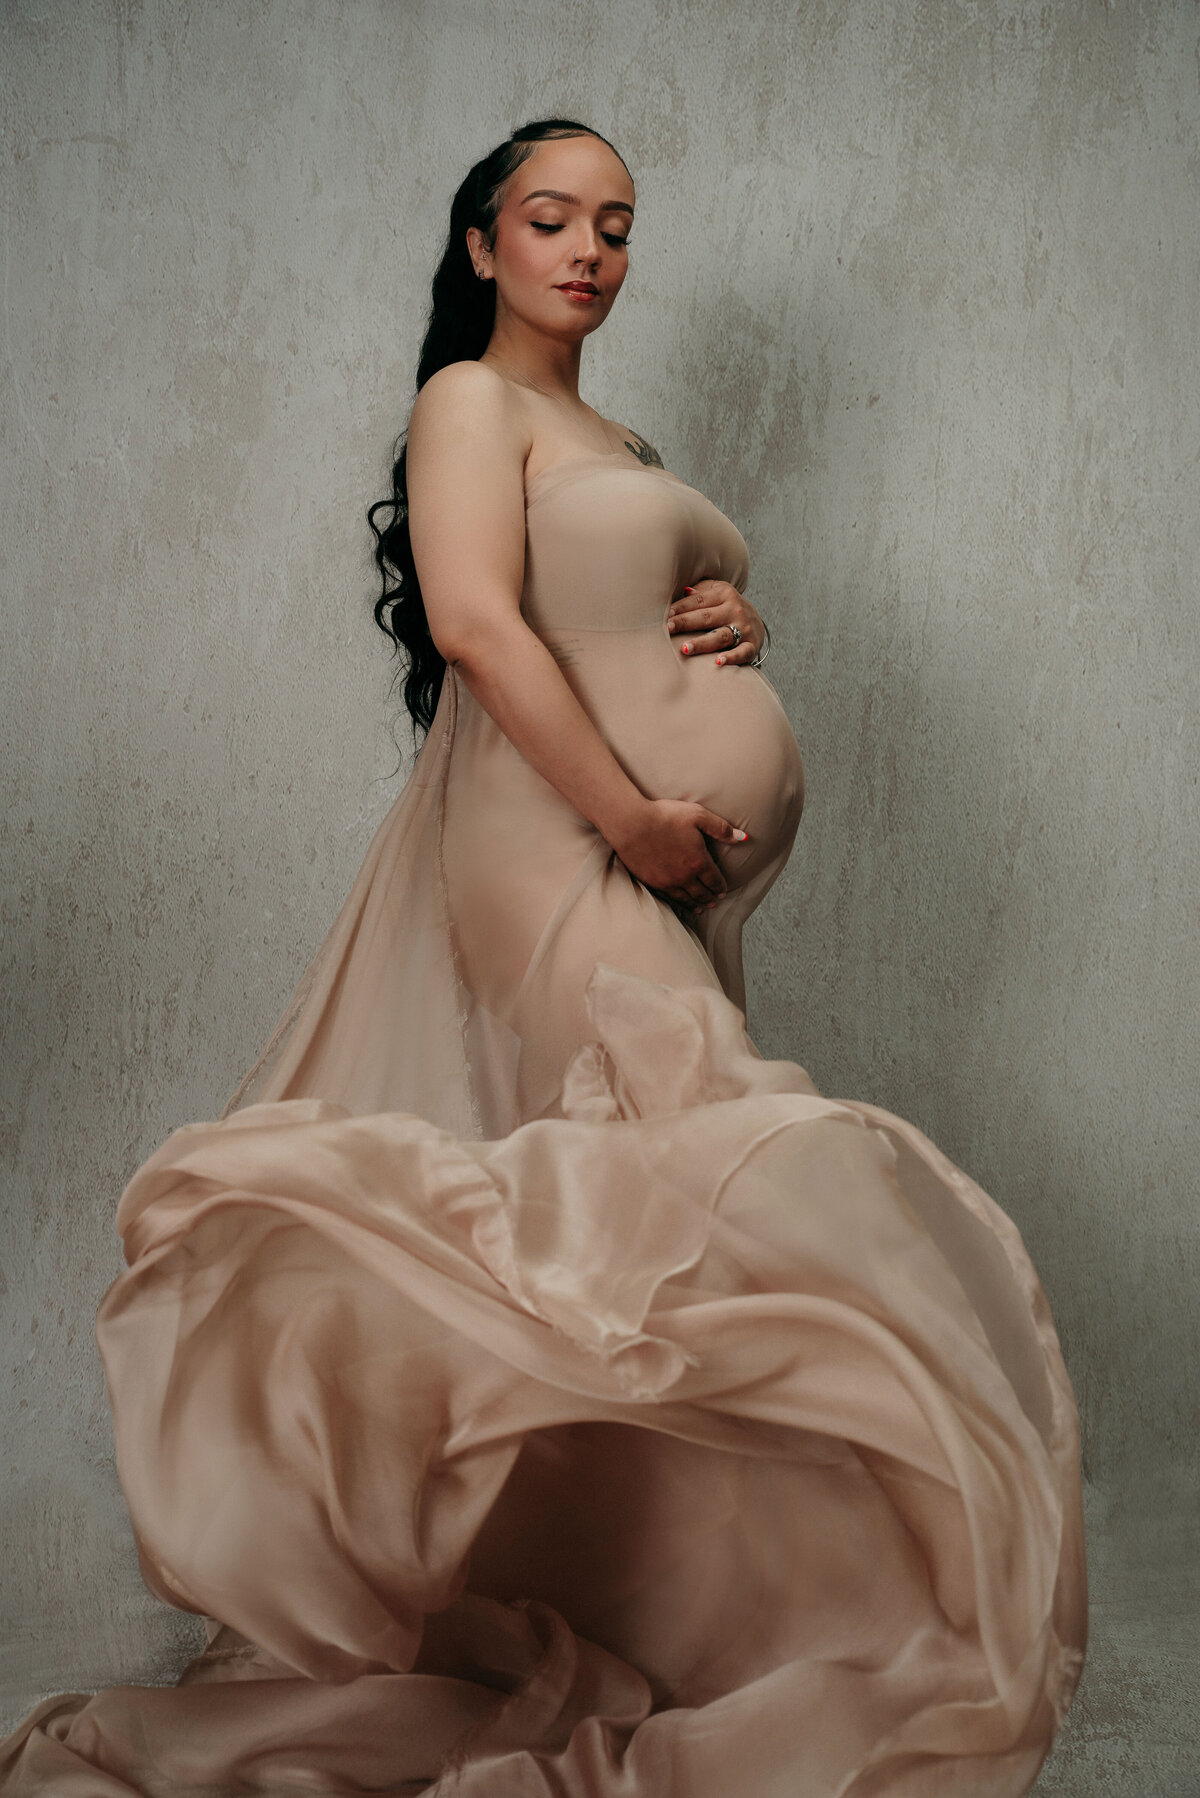 Pregnant woman holding baby bump wearing cream chiffon fabric